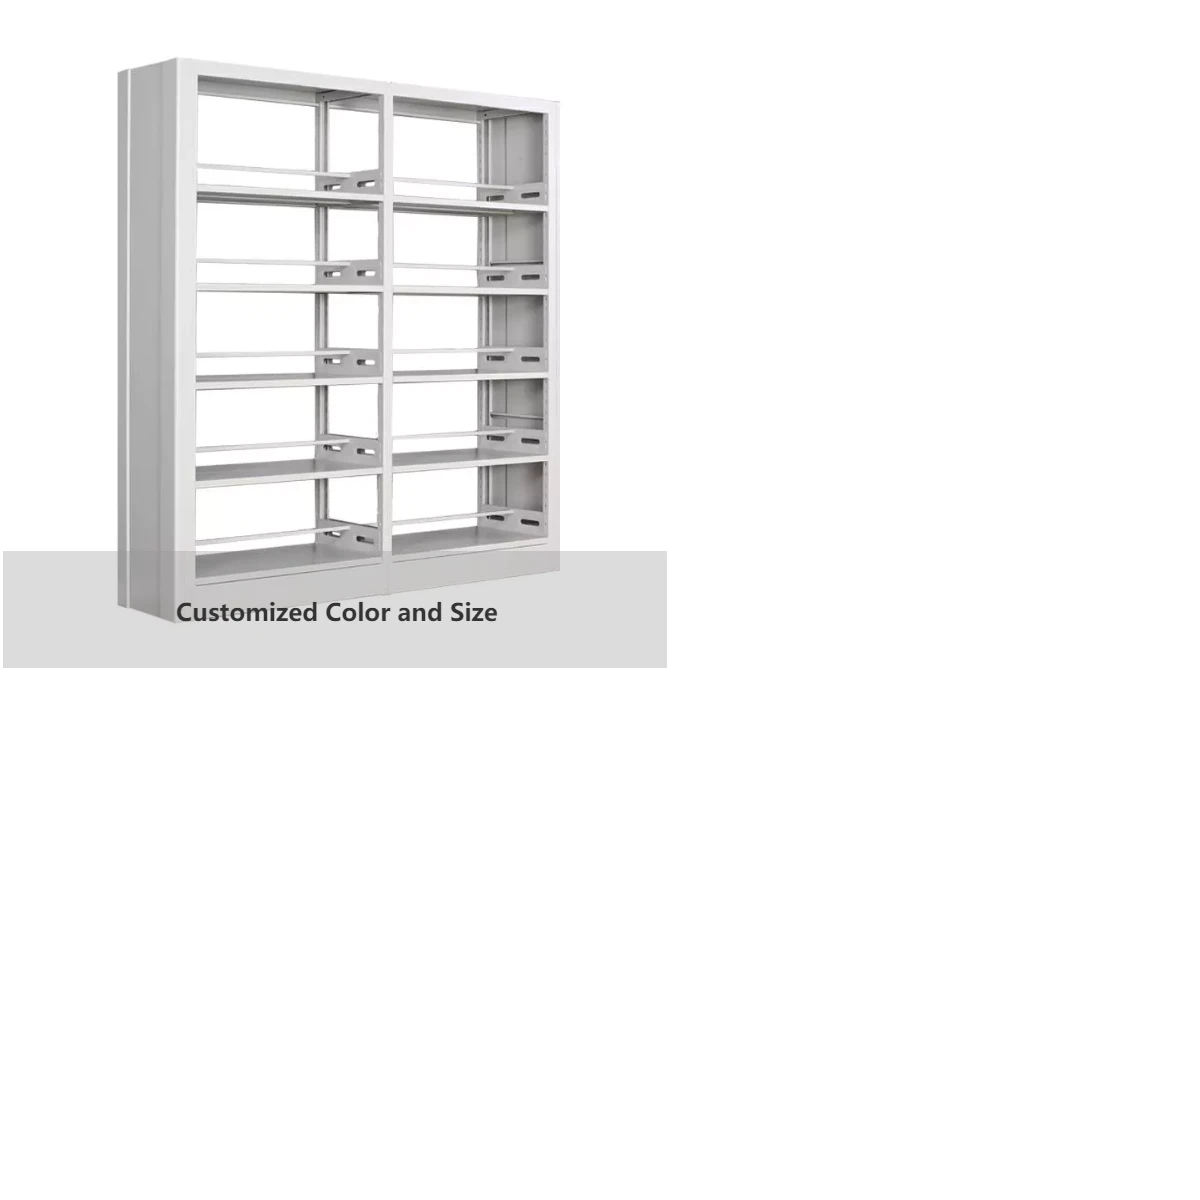 Modern Bookcase Design Metal Double Sided Fashion Steel School Library Bookshelf